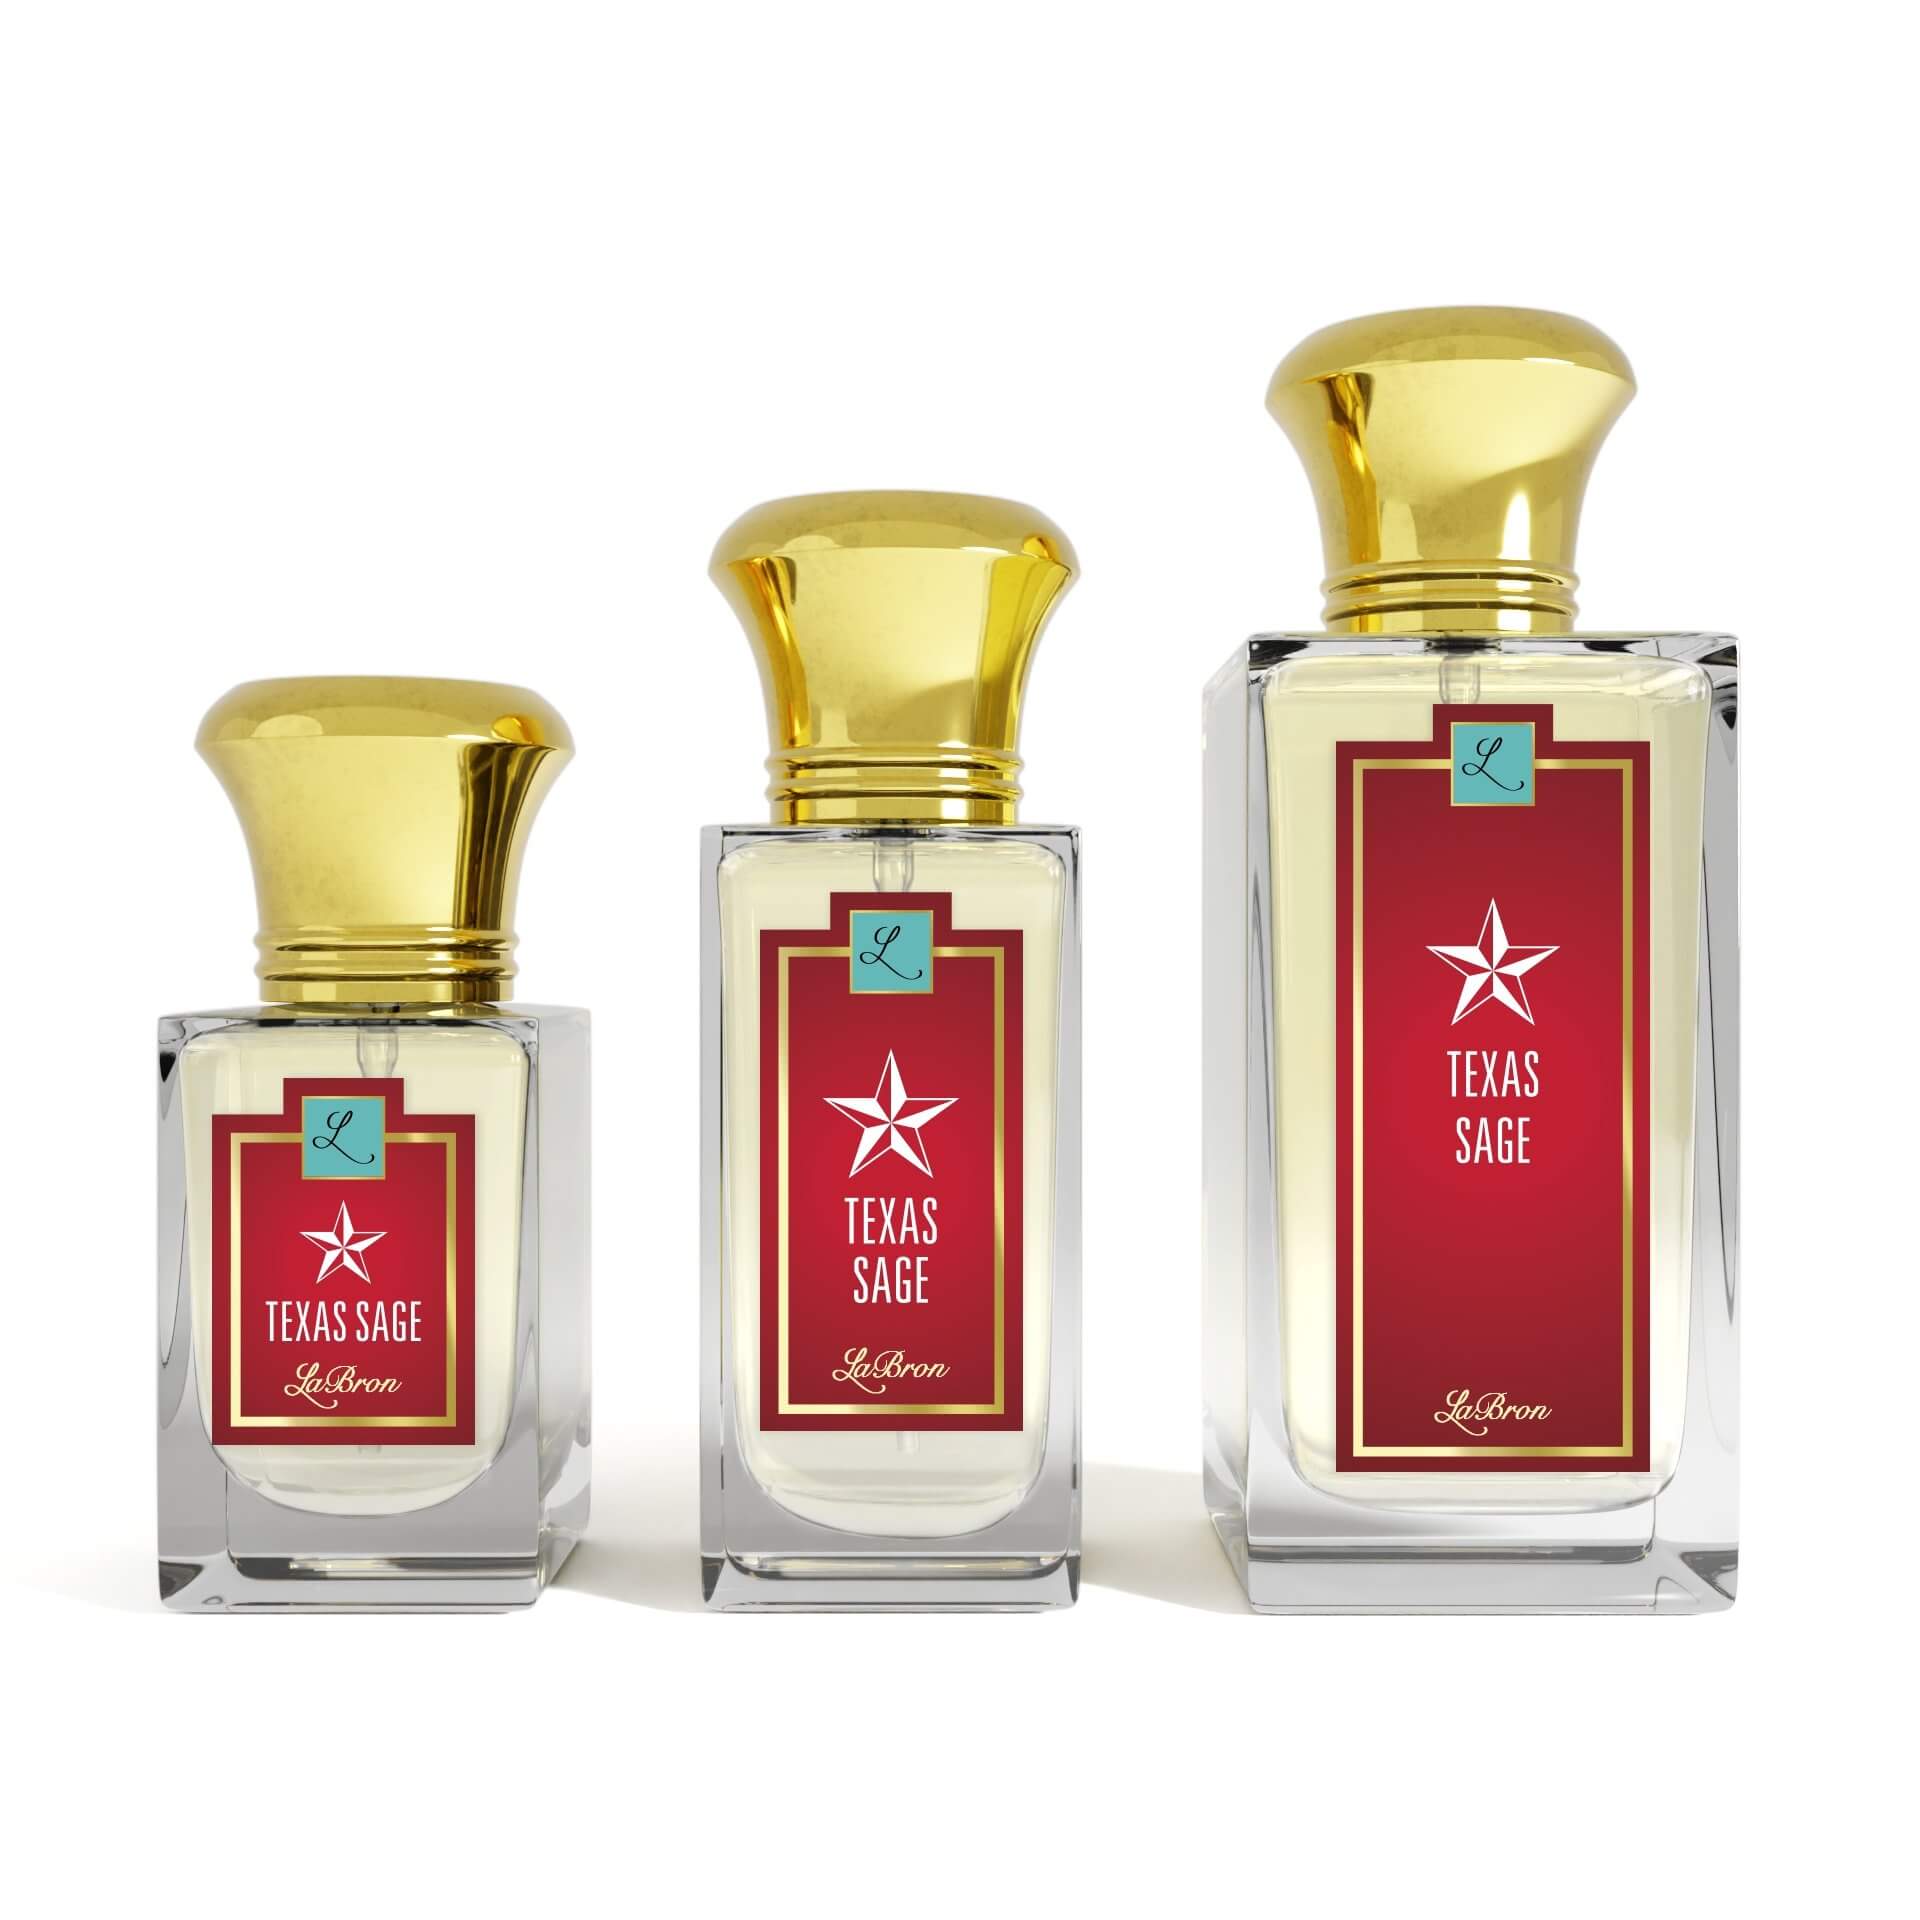 Frankincense & Myrrh Fragrance Oil - Lone Star Candle Supply